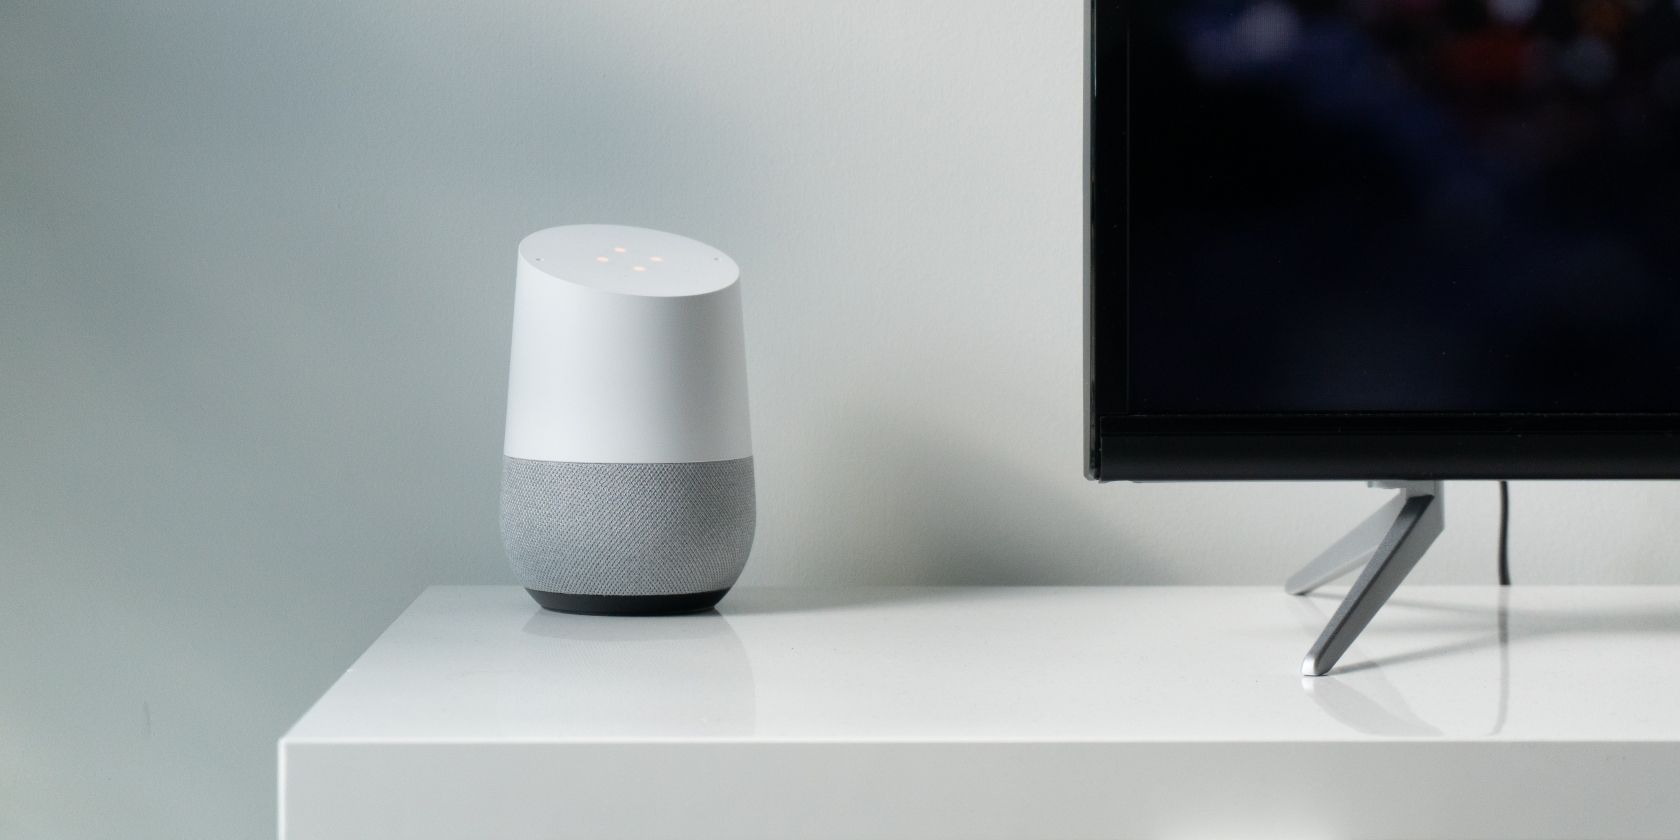 A Google Home Smart Speaker Next to a TV